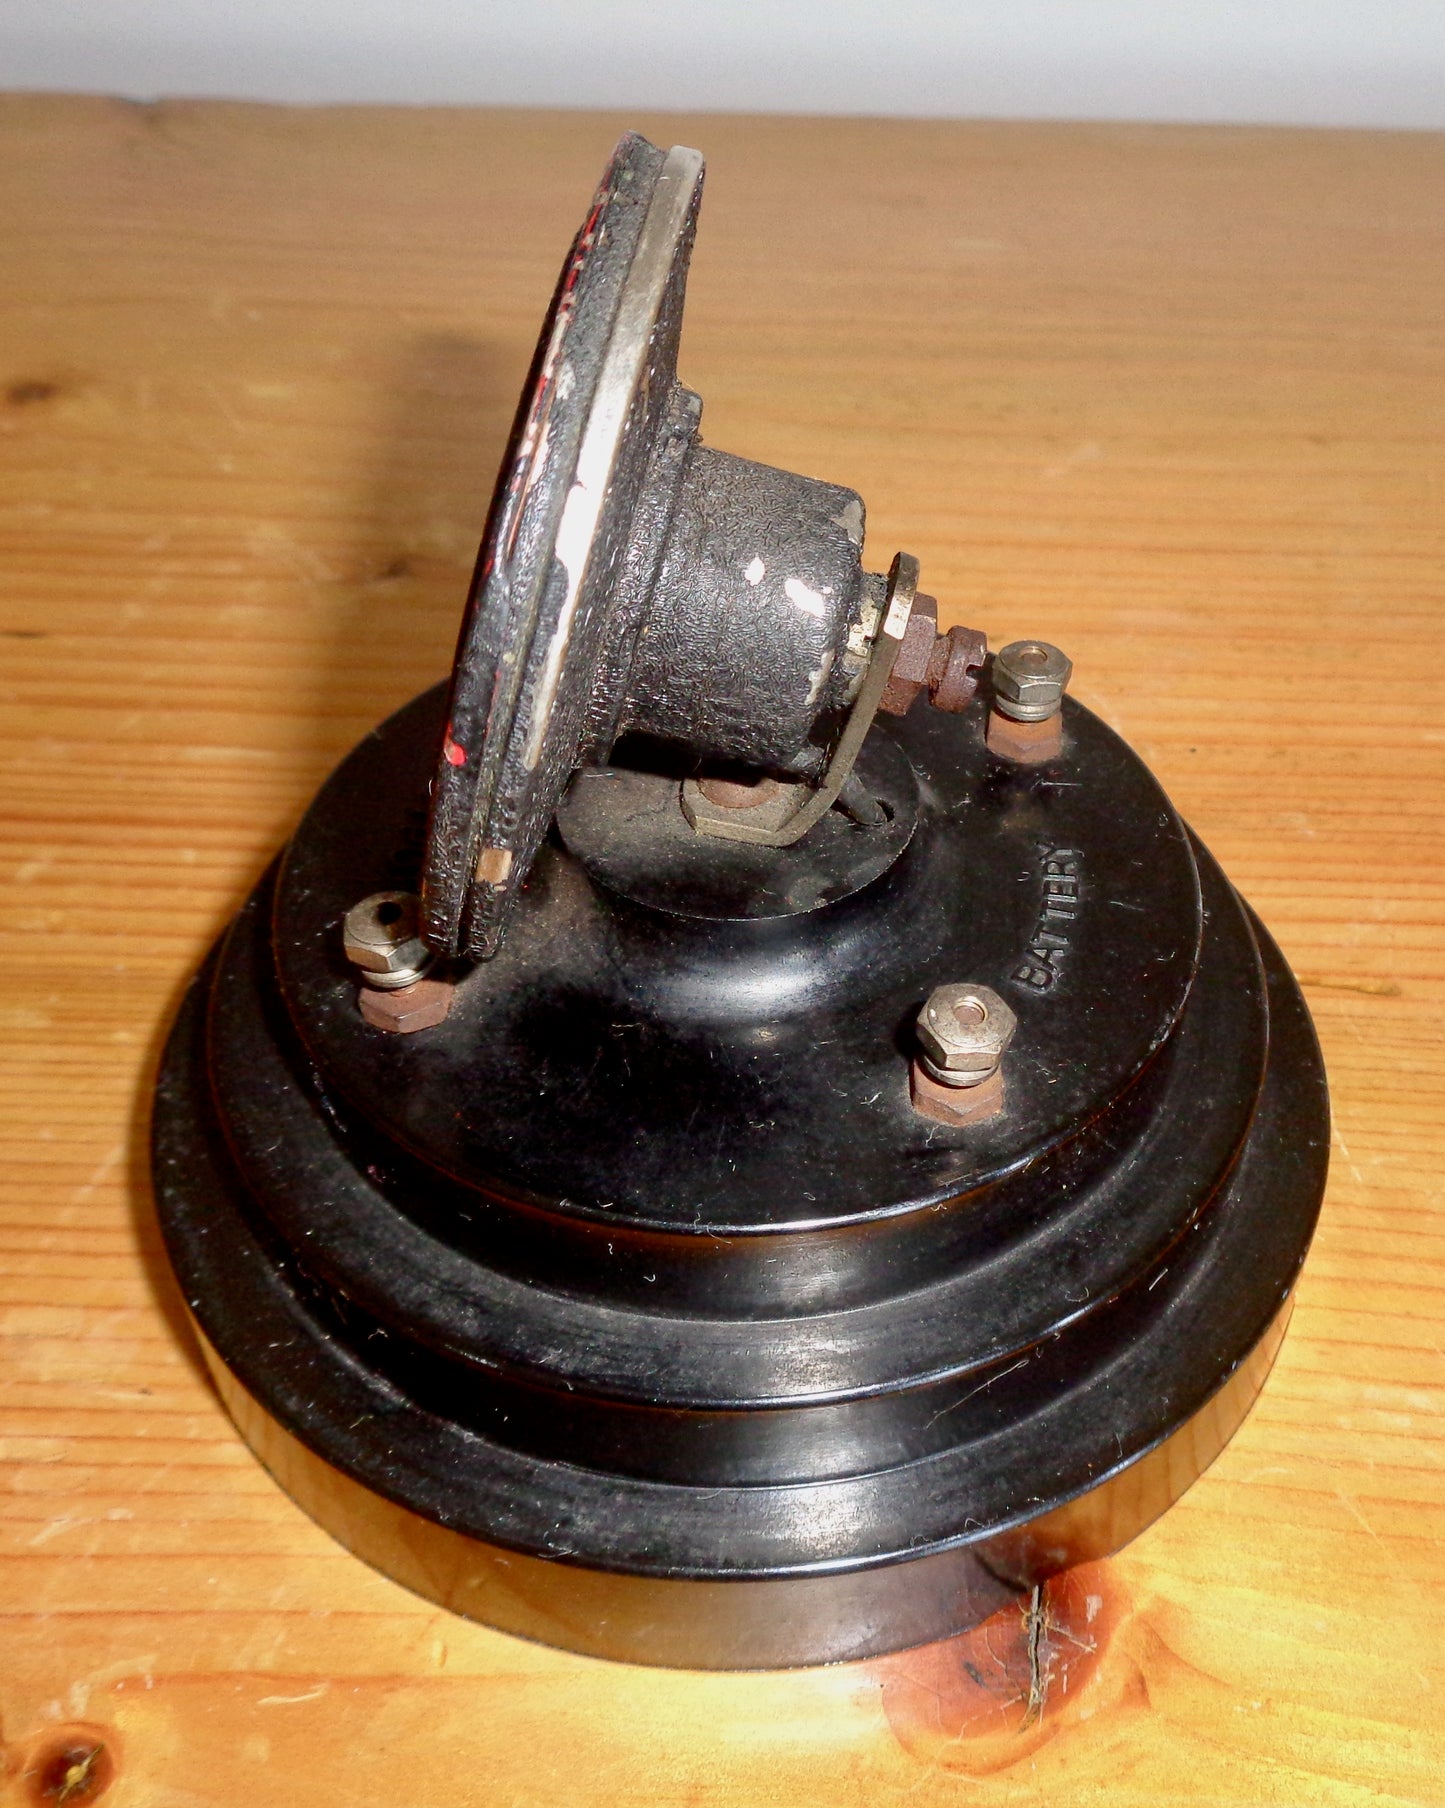 Vintage Bakelite Home Broadcasters Desk Microphone